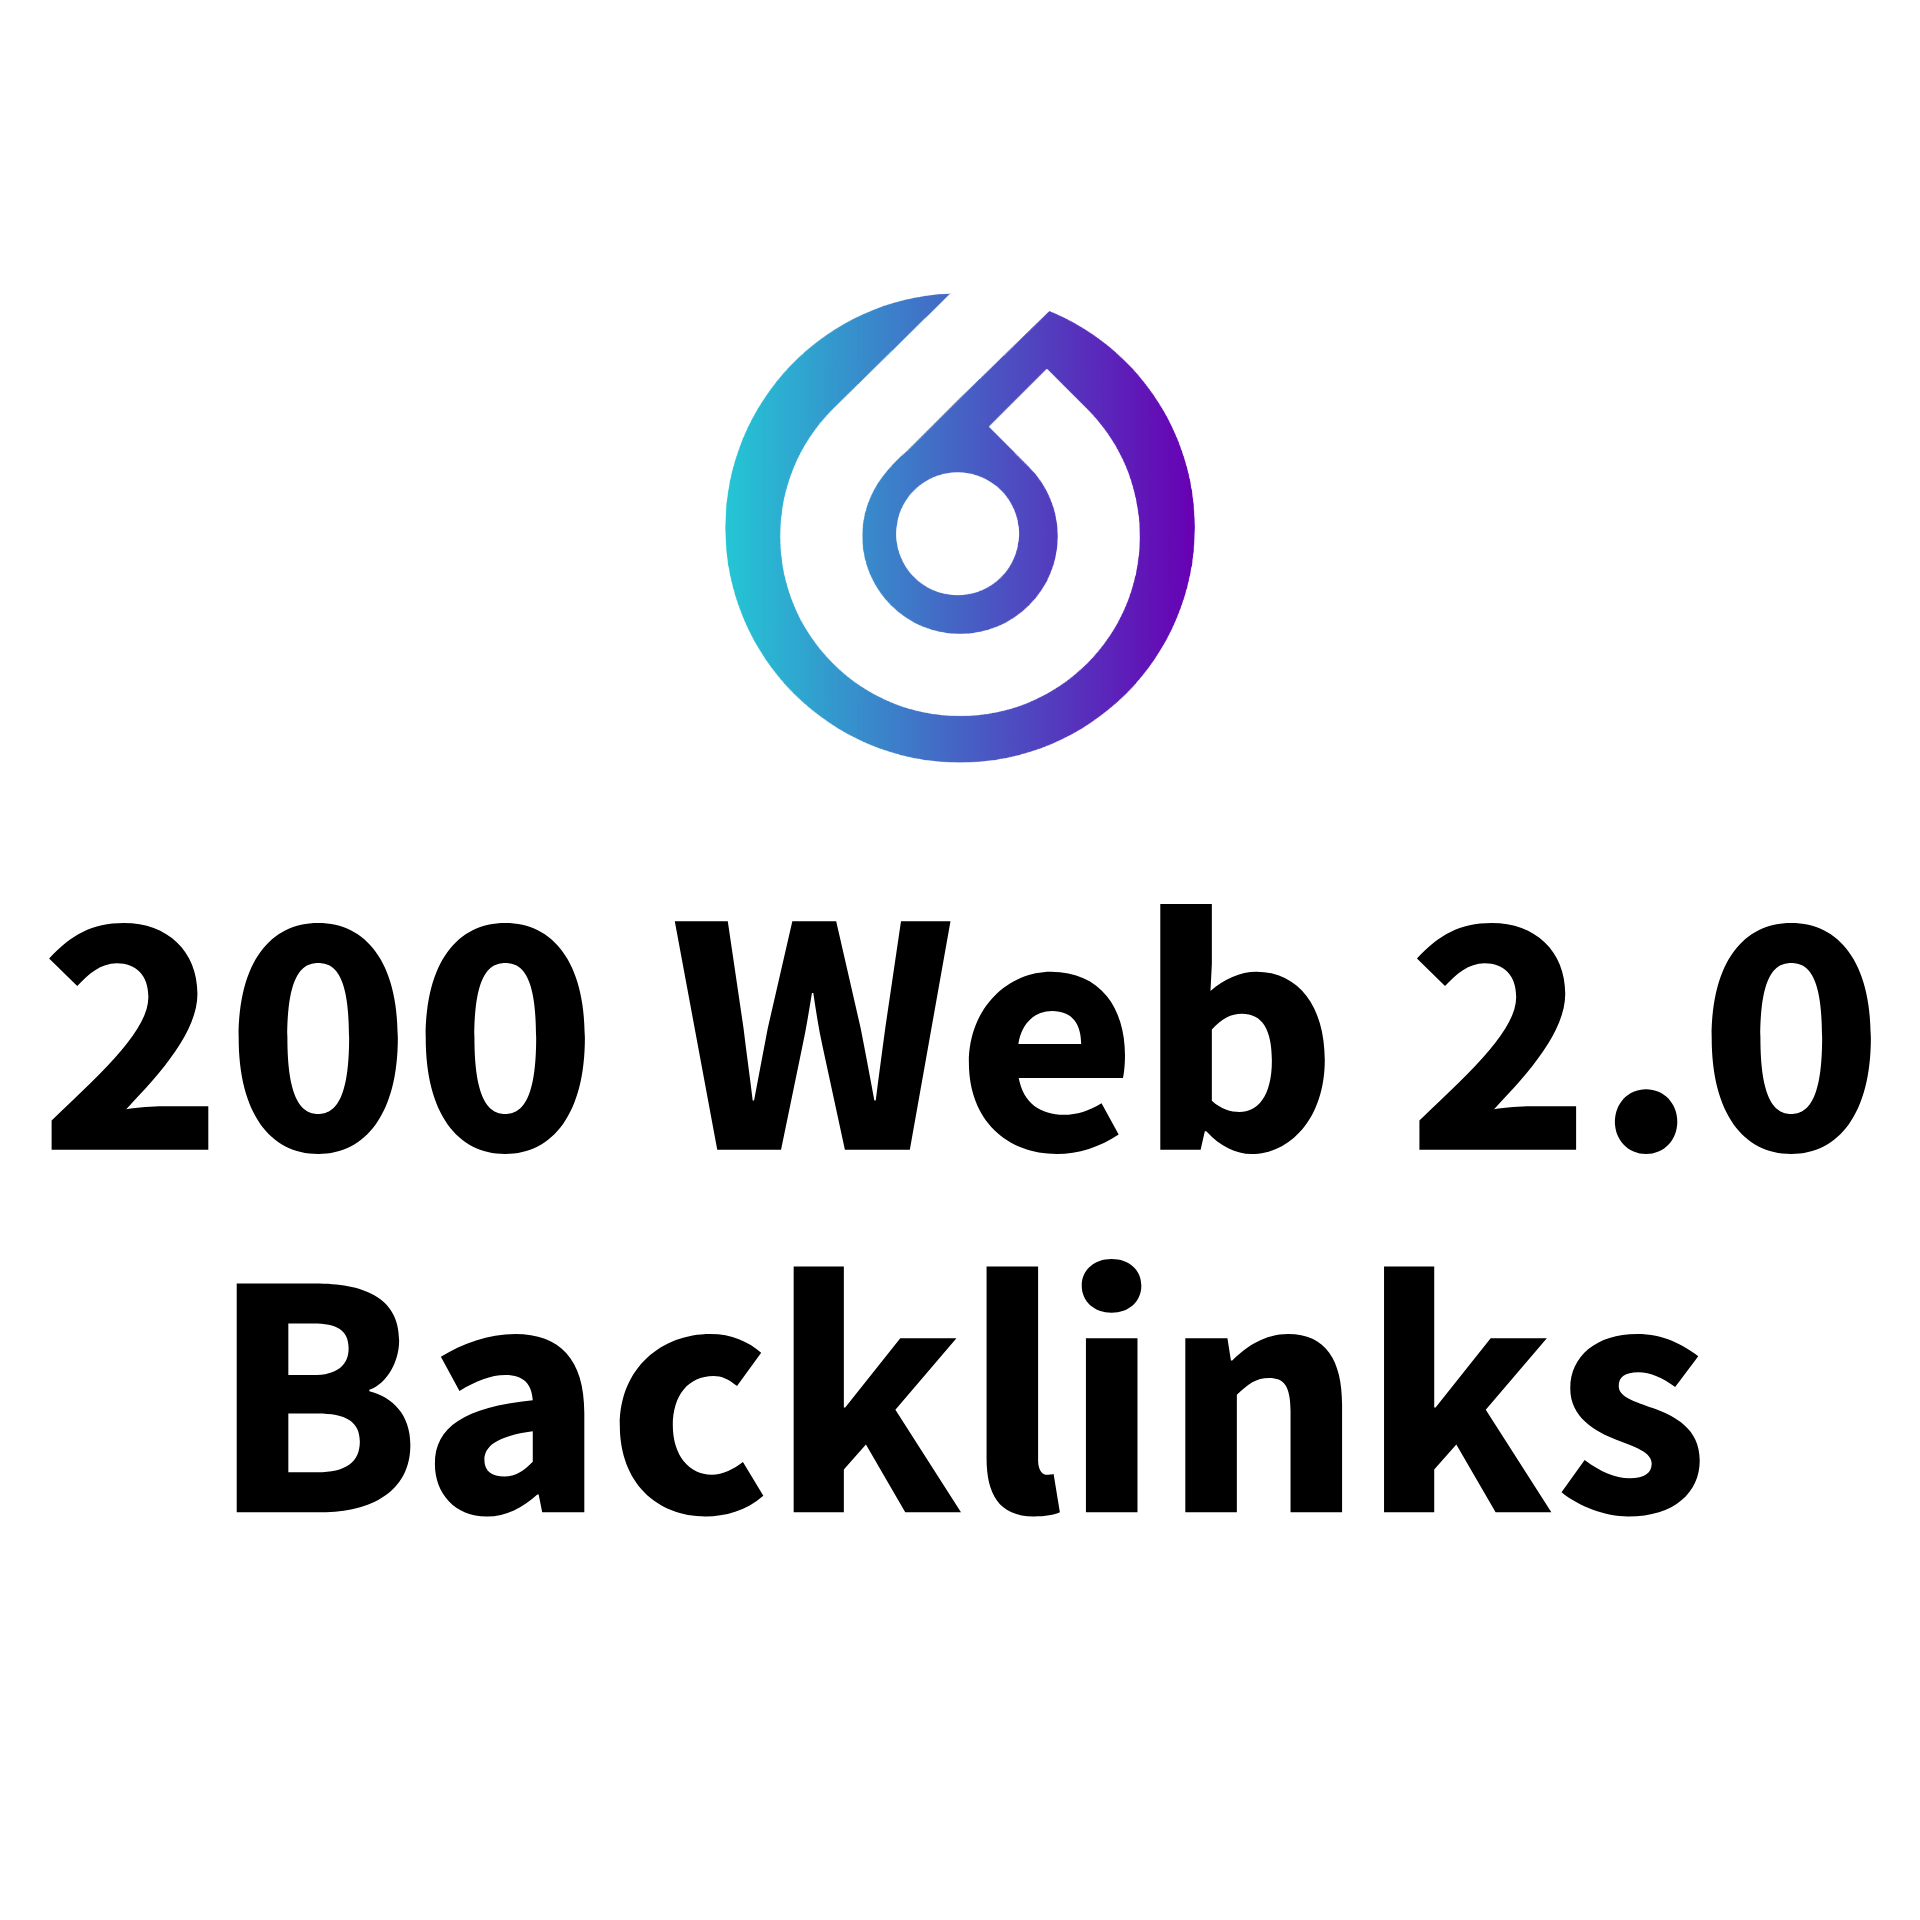 I Will Build You 200 Web 2.0 Backlinks 